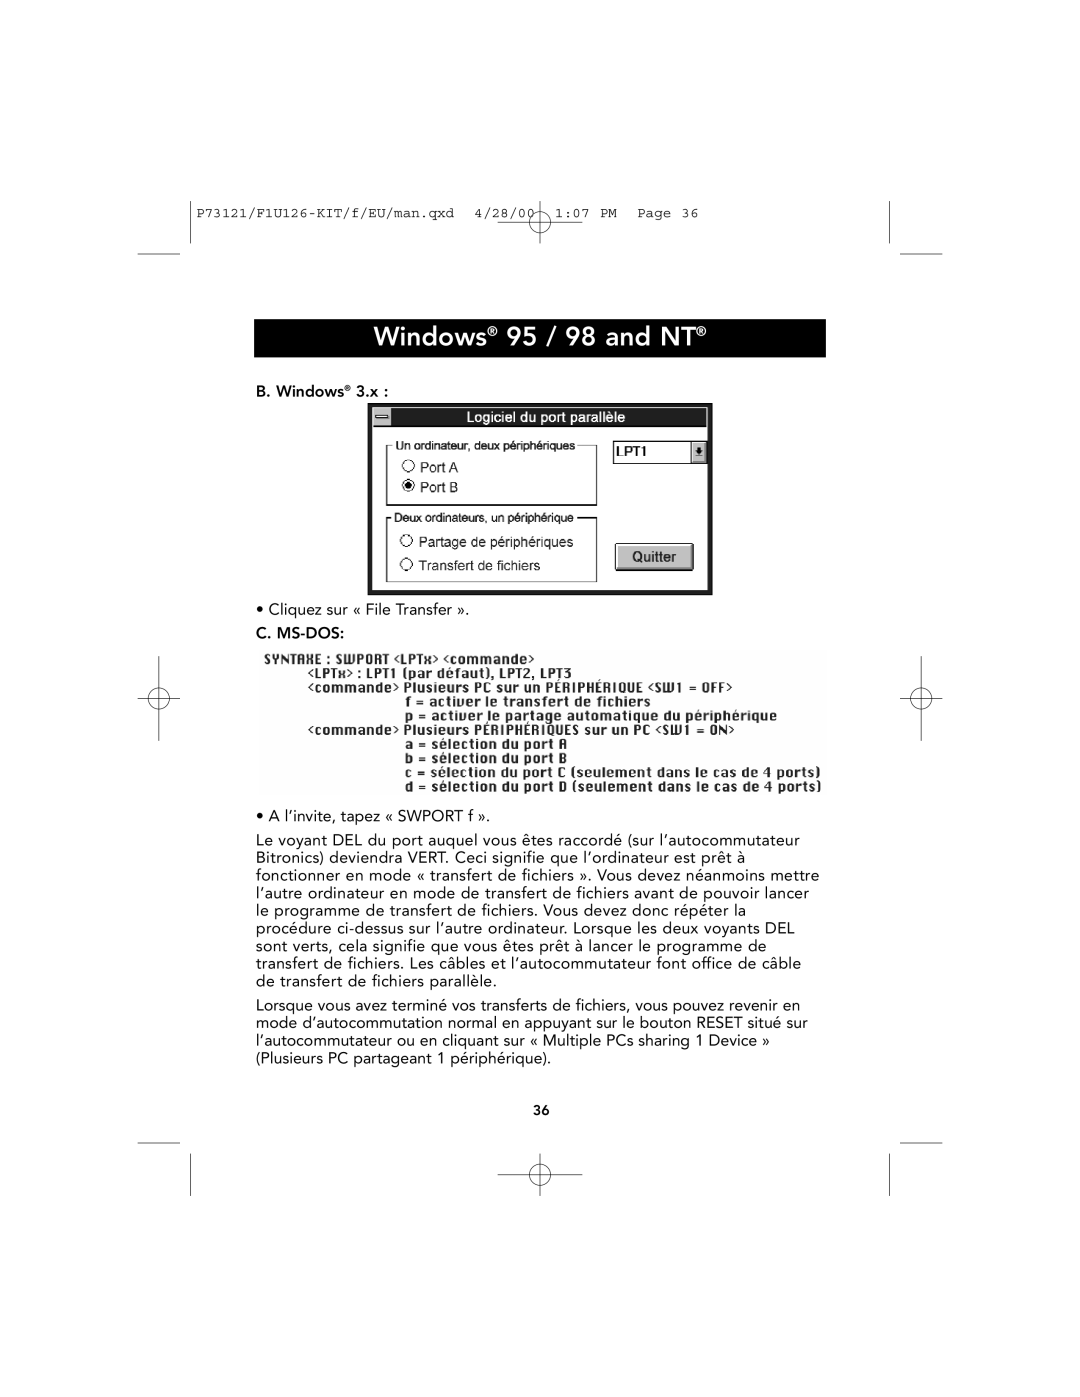 Belkin P73121, F1U126-KIT user manual Windows 95 / 98 and NT, B. Windows Cliquez sur « File Transfer ». C. MS-DOS 